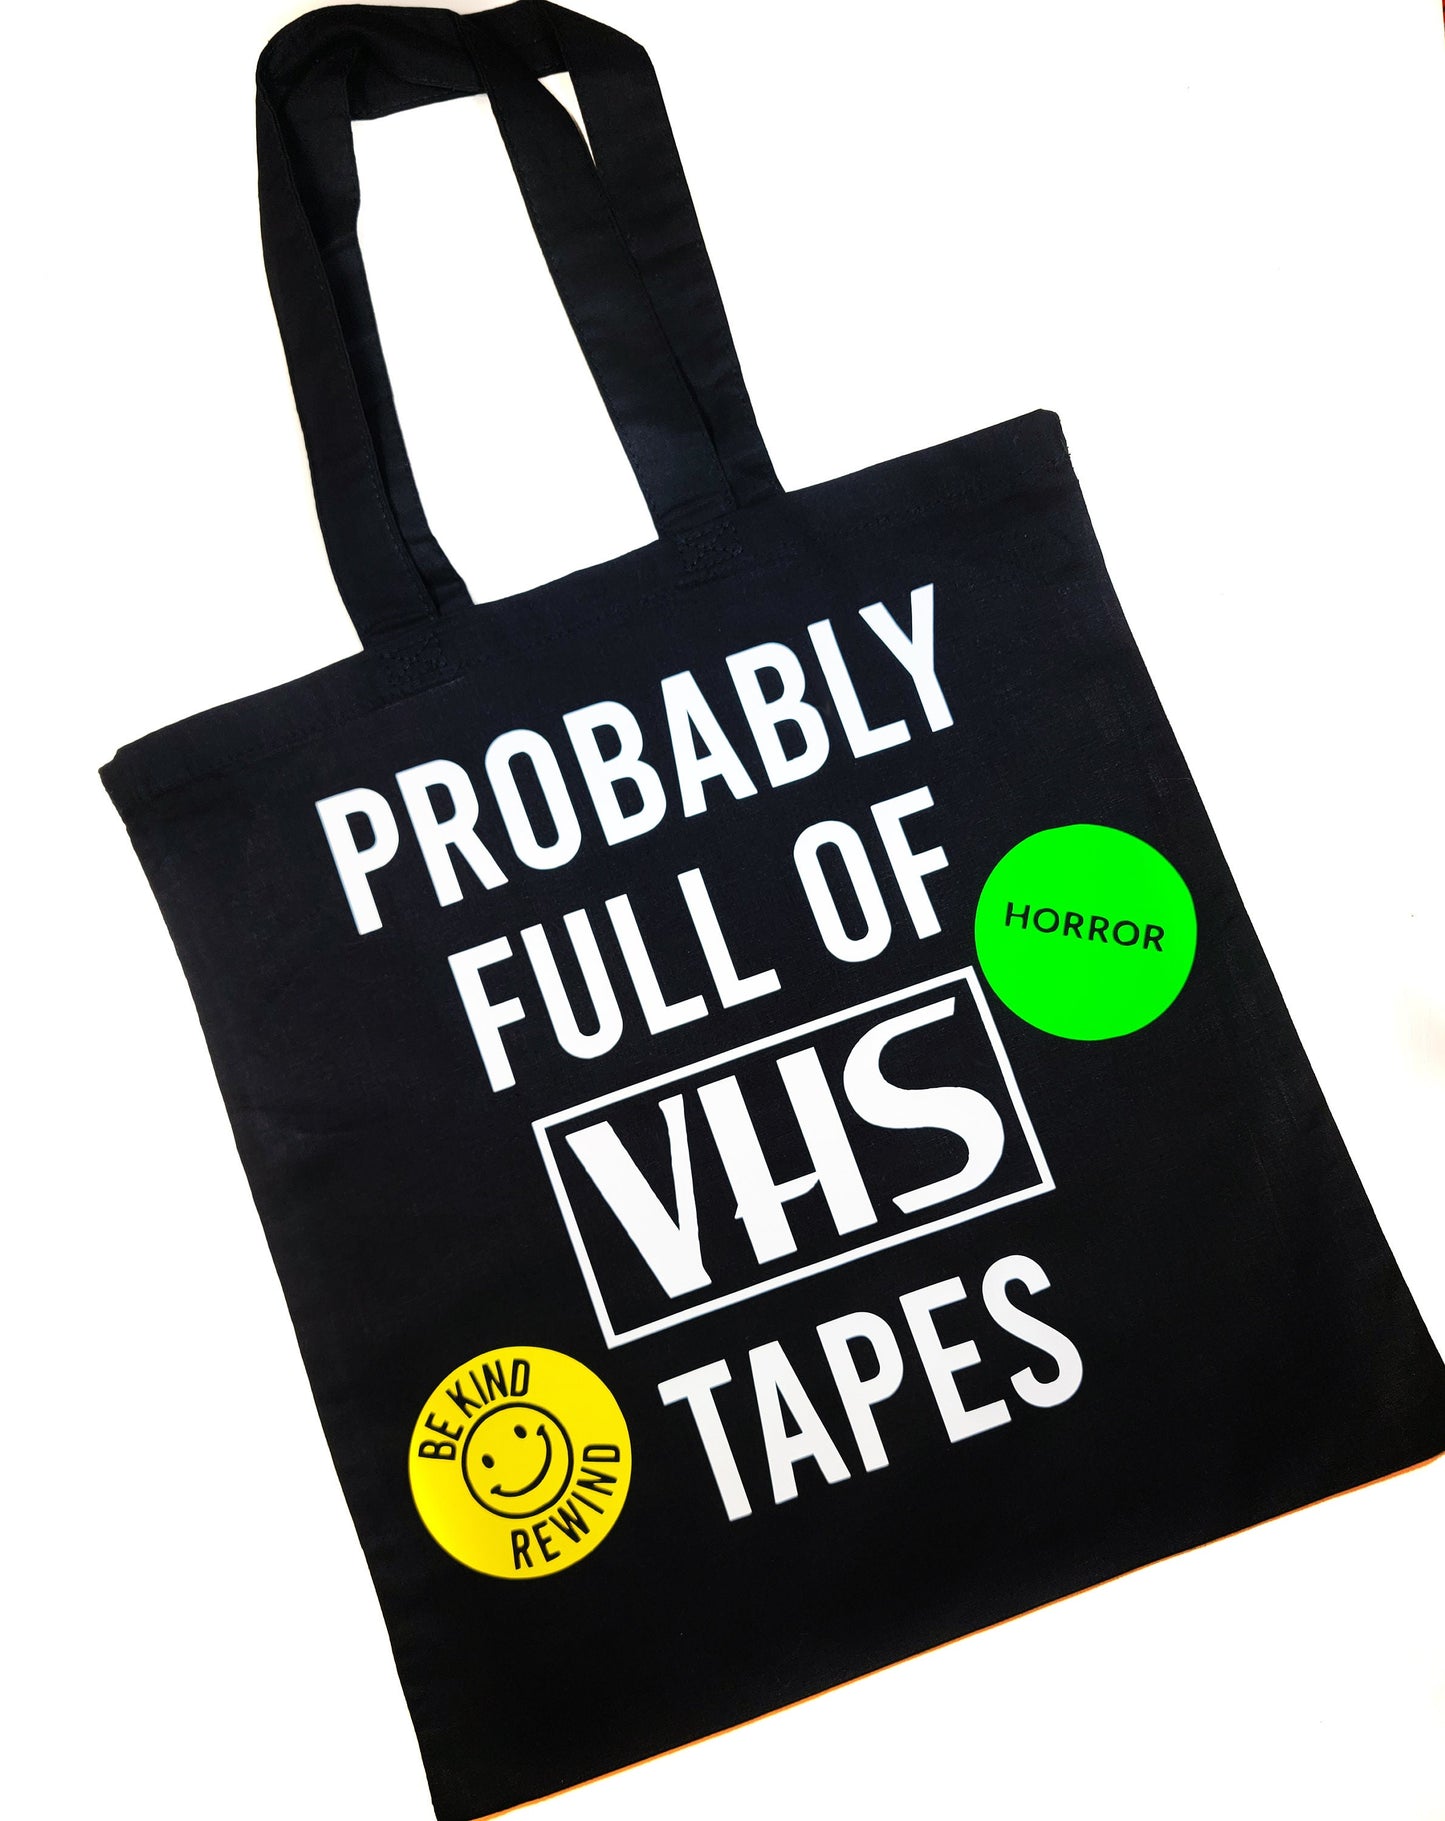 Full Of VHS Tapes Tote Bag Black Cotton Reusable Shopping Bag 15"x16"